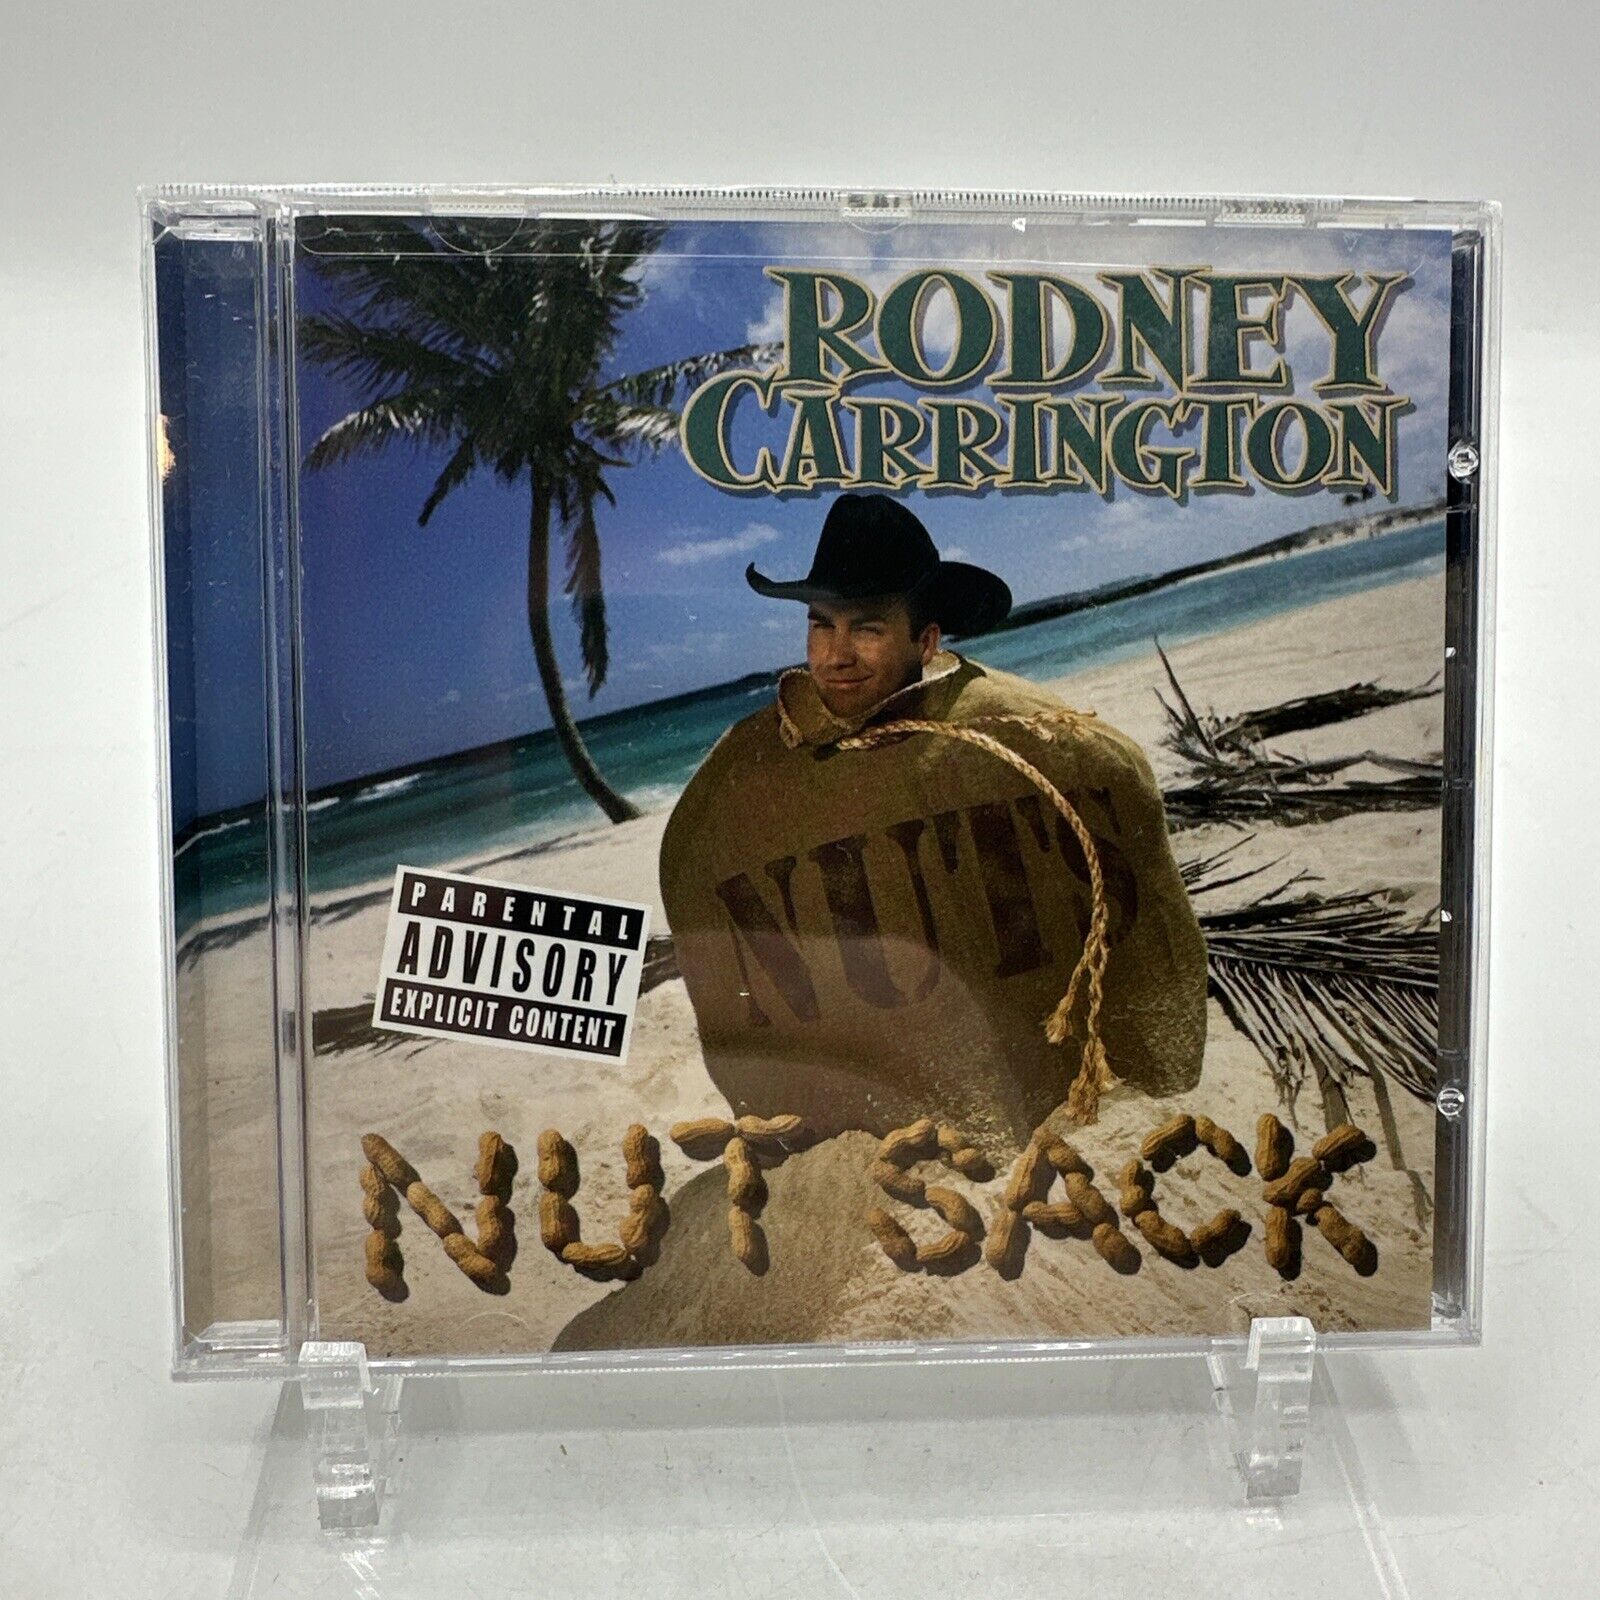 Nut Sack by Rodney Carrington (CD, 2003) Brand New Sealed Comedy Album